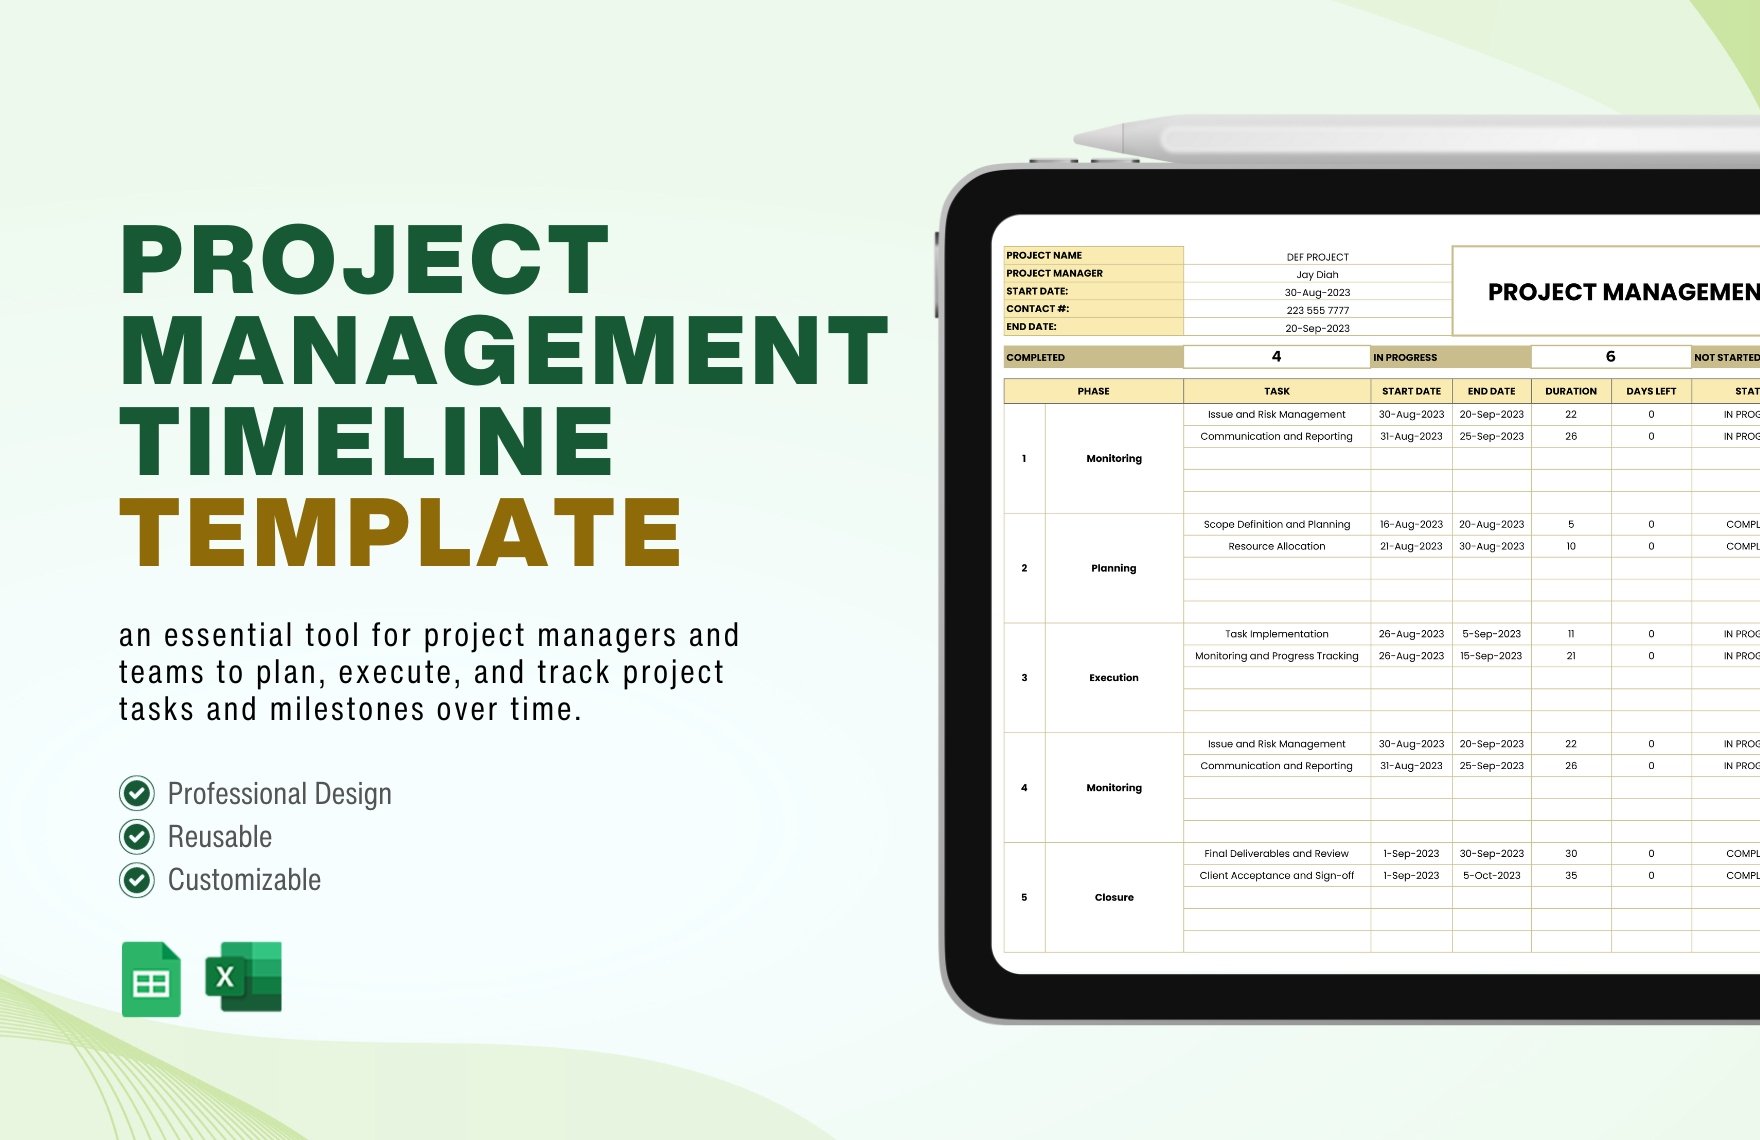 Project Management Timeline Template